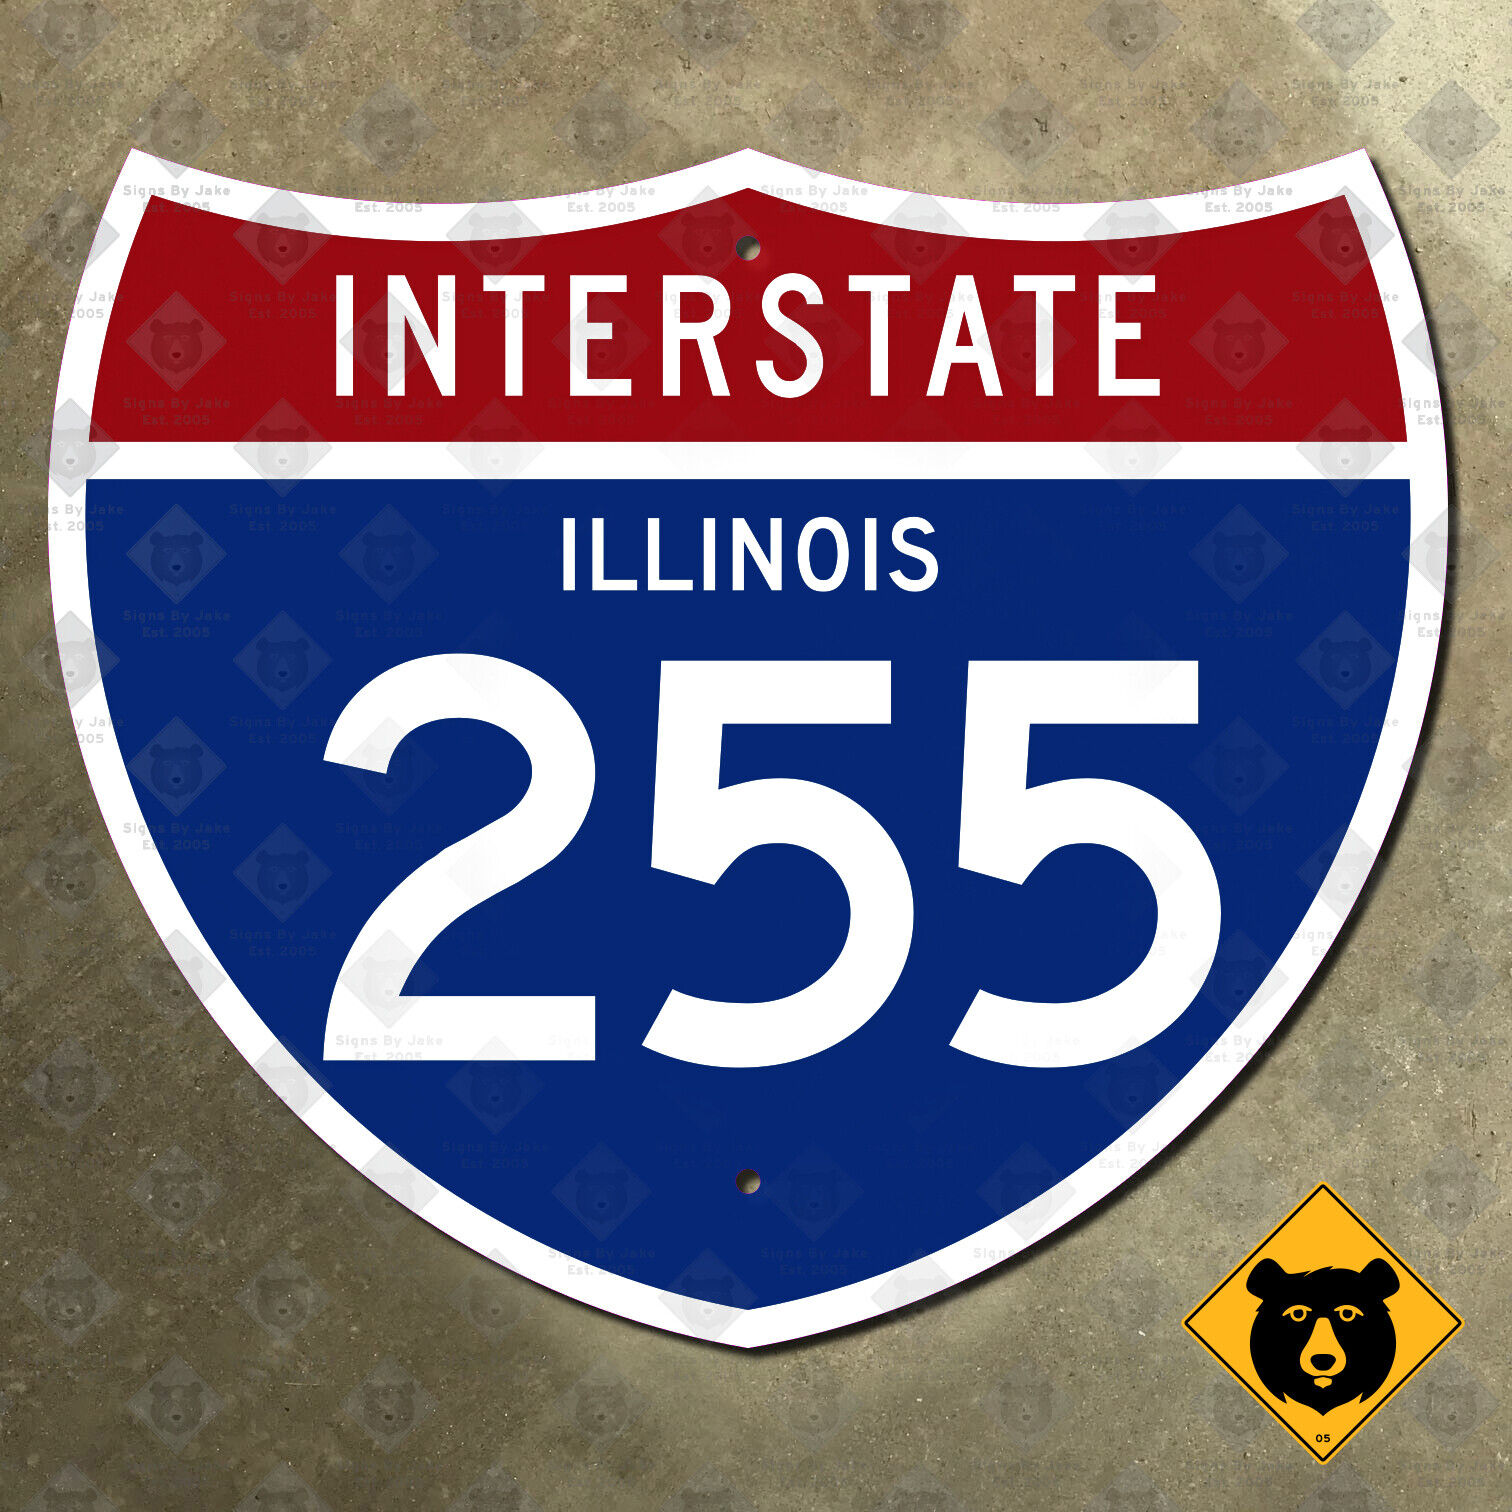 Illinois Interstate 255 highway marker 1961 Greater Saint Louis loop metro 21x18